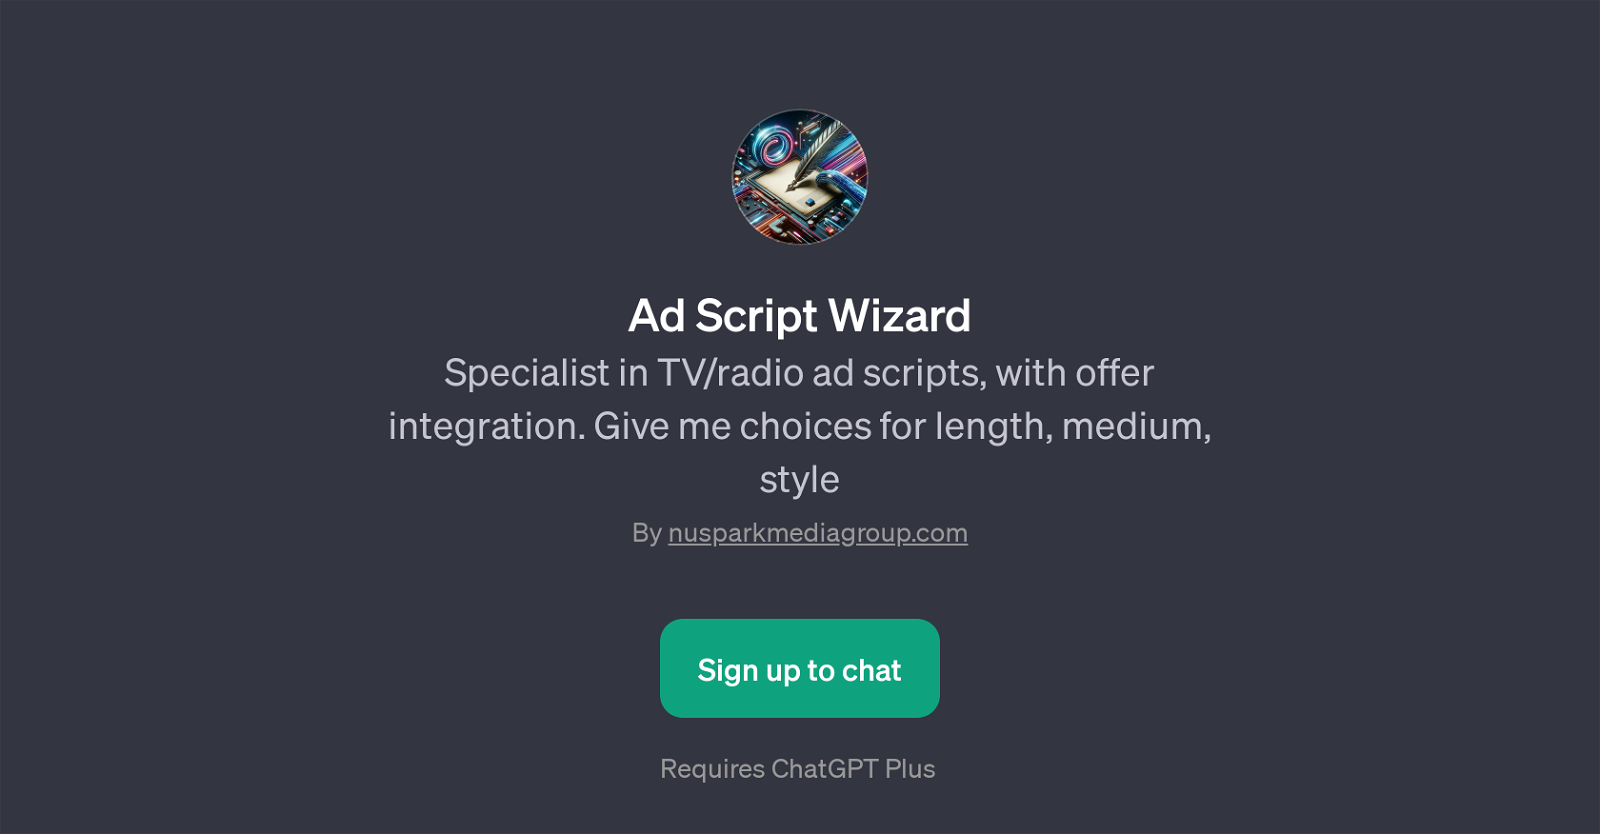 Ad Script Wizard website